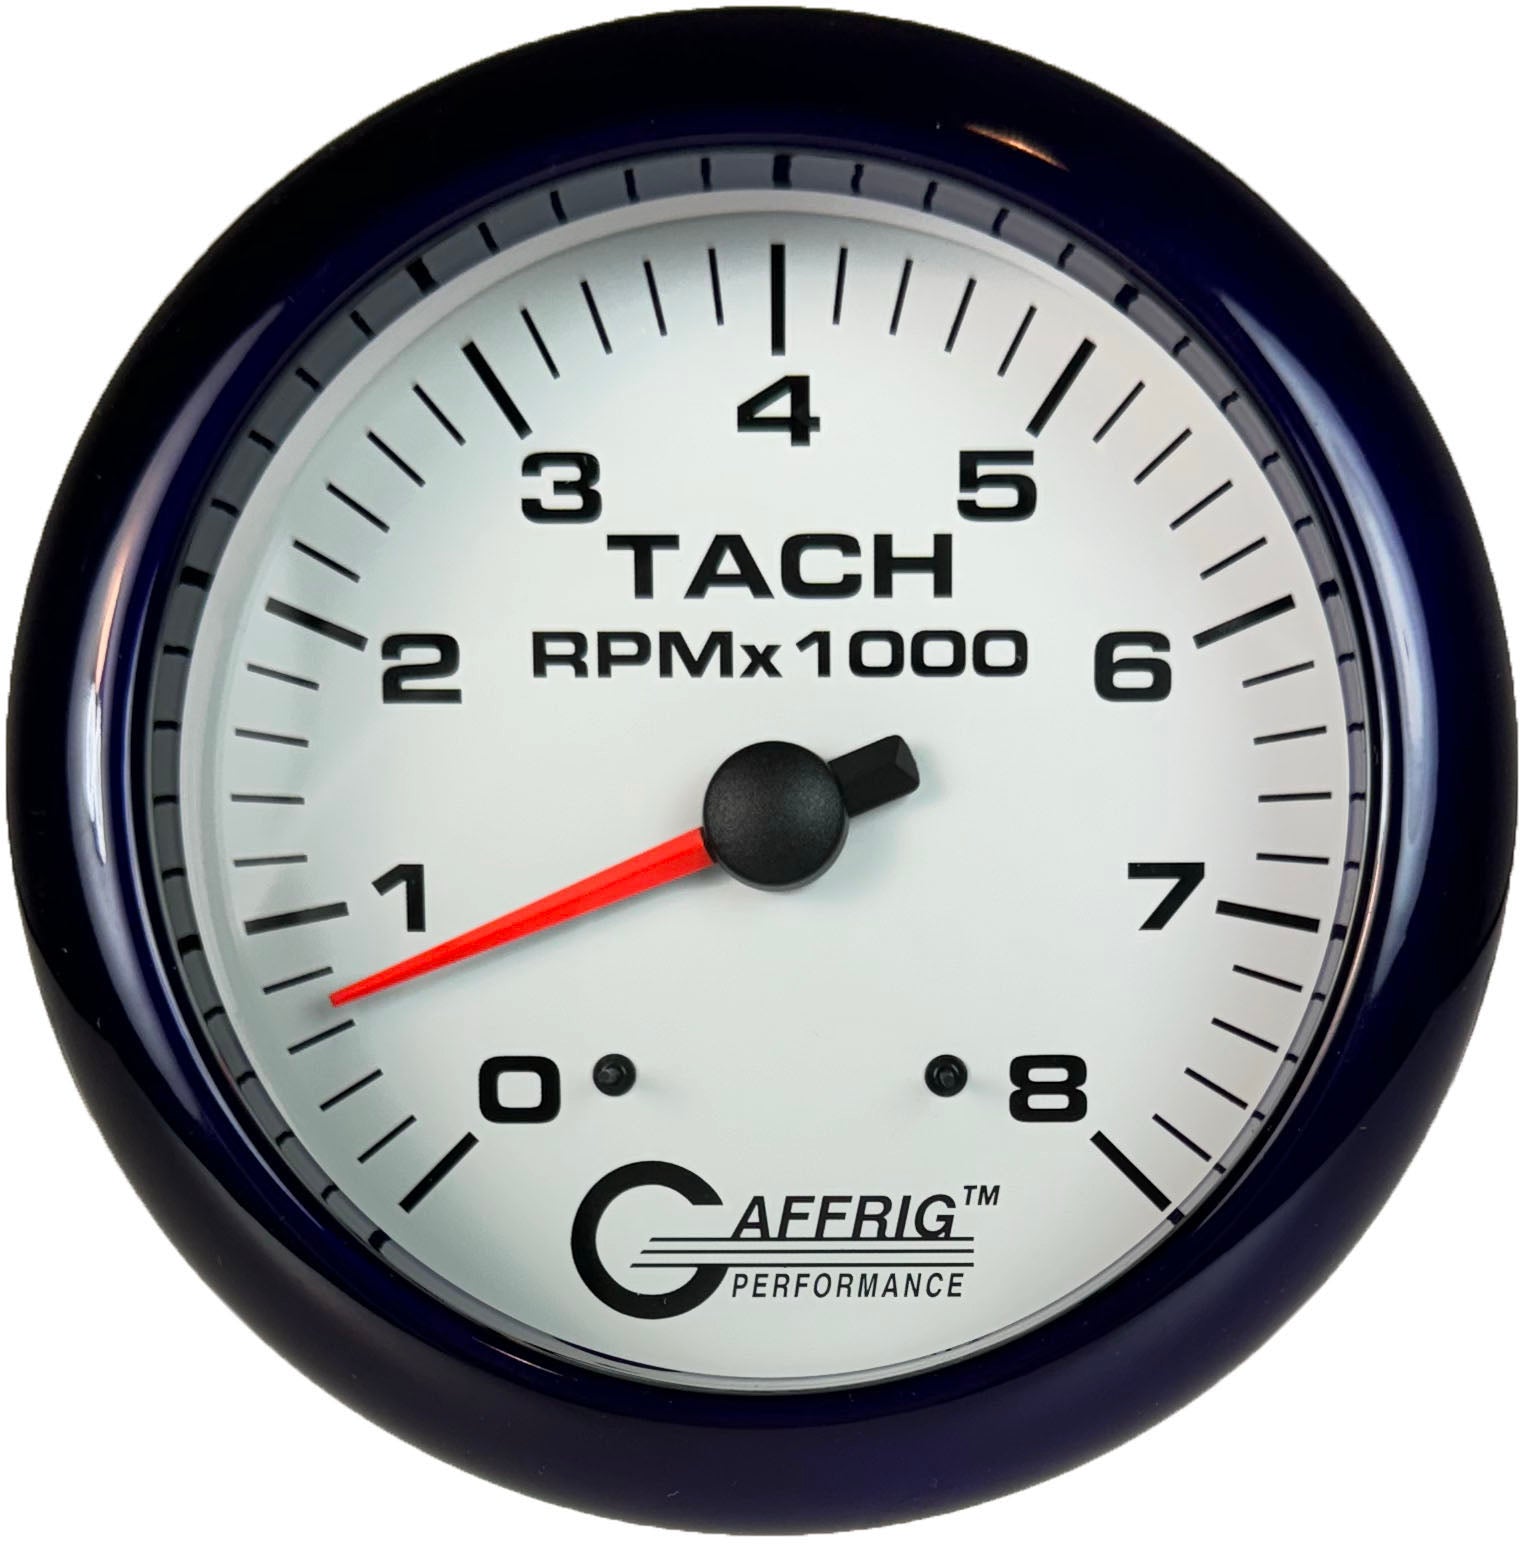 GAFFRIG PART #10019 4 5/8 INCH ELECTRIC TACHOMETER GAUGE 0-8000 RPM WHITE PURPLE